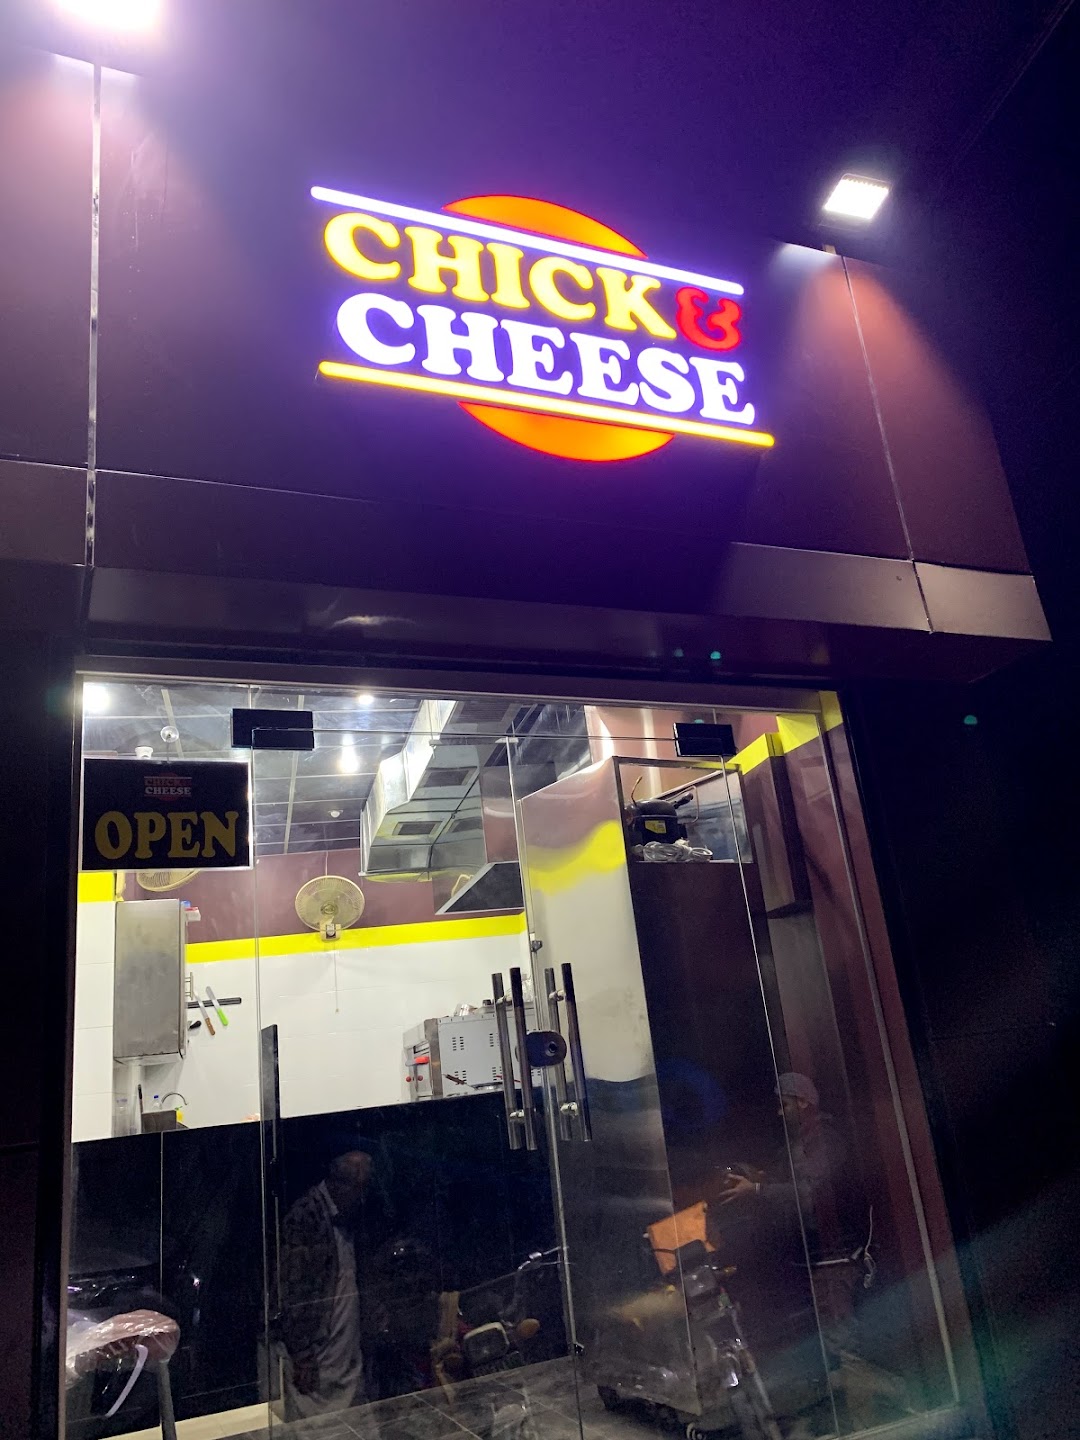 Chick & Cheese